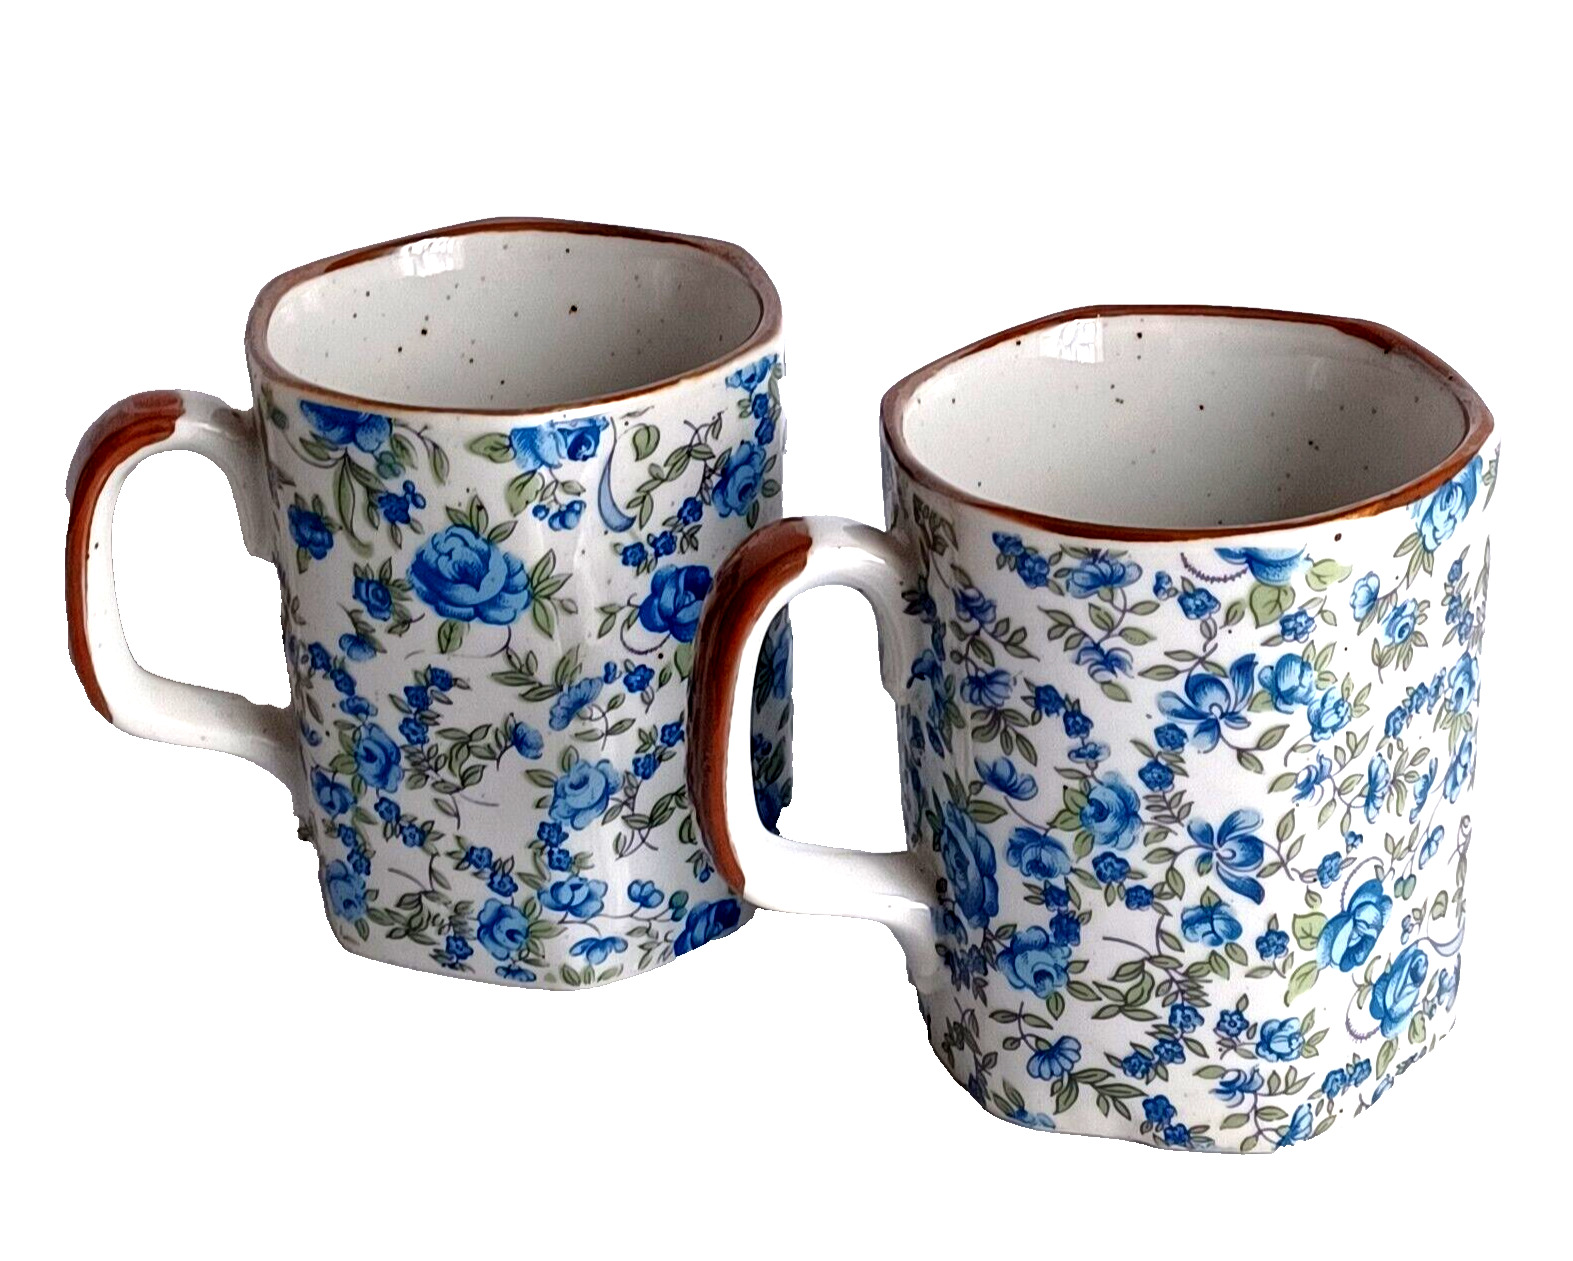 Otigari Mug Stoneware Vintage Blue Roses Cottage Core Tone Brown Handle $10 each